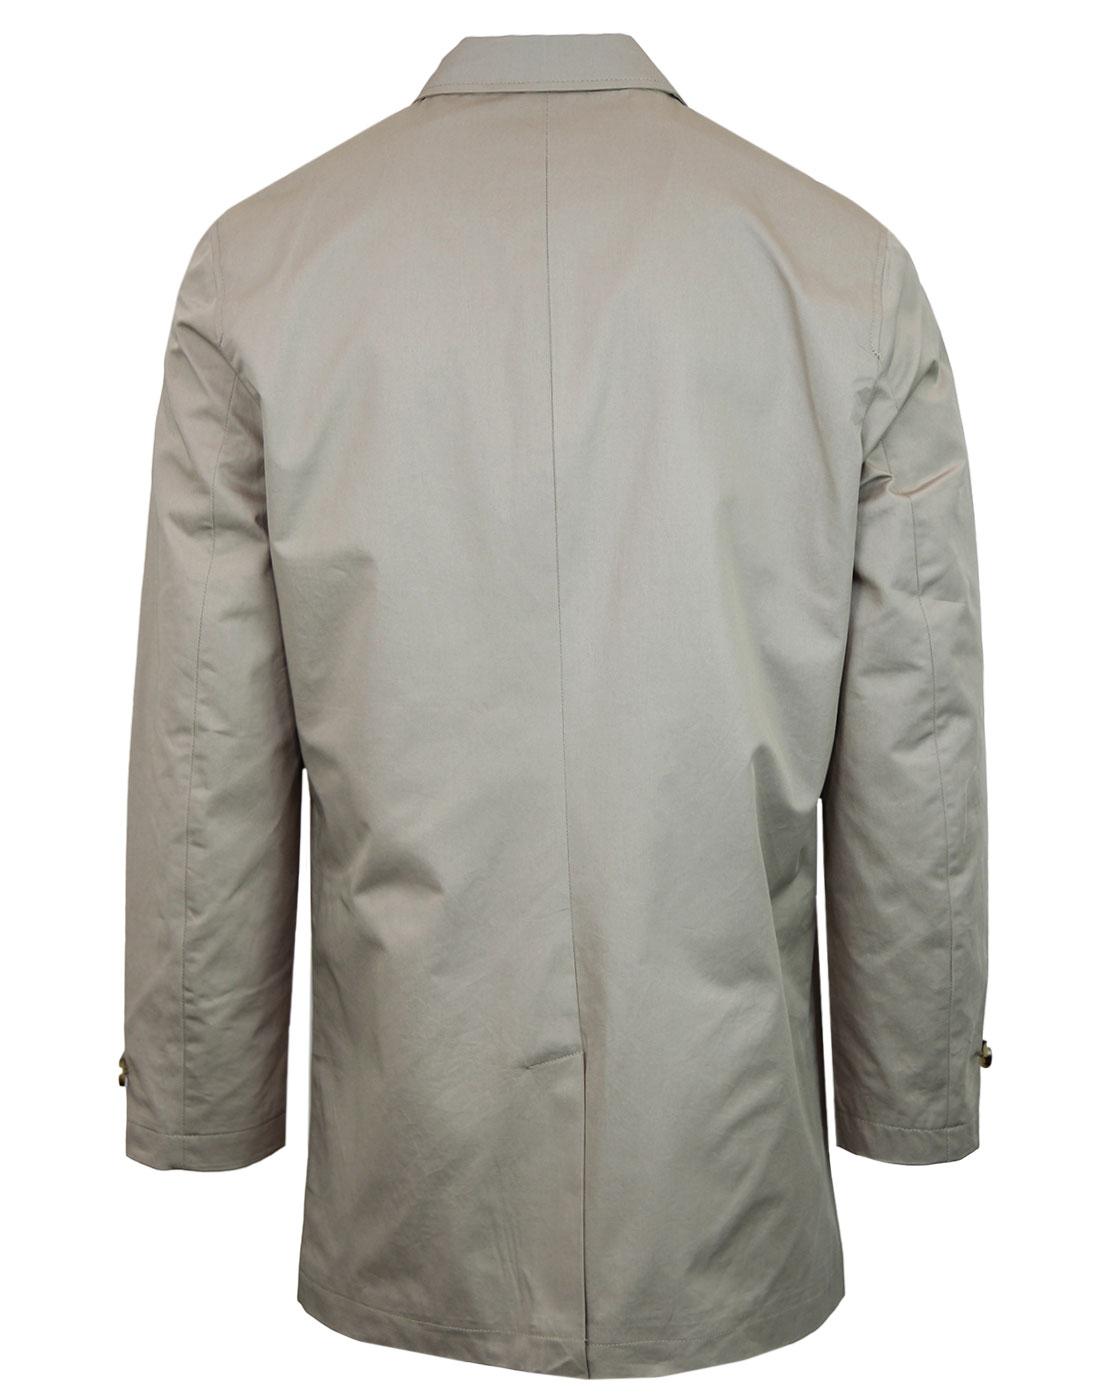 BEN SHERMAN Men's Retro Mod Cotton Mac Jacket in Stone